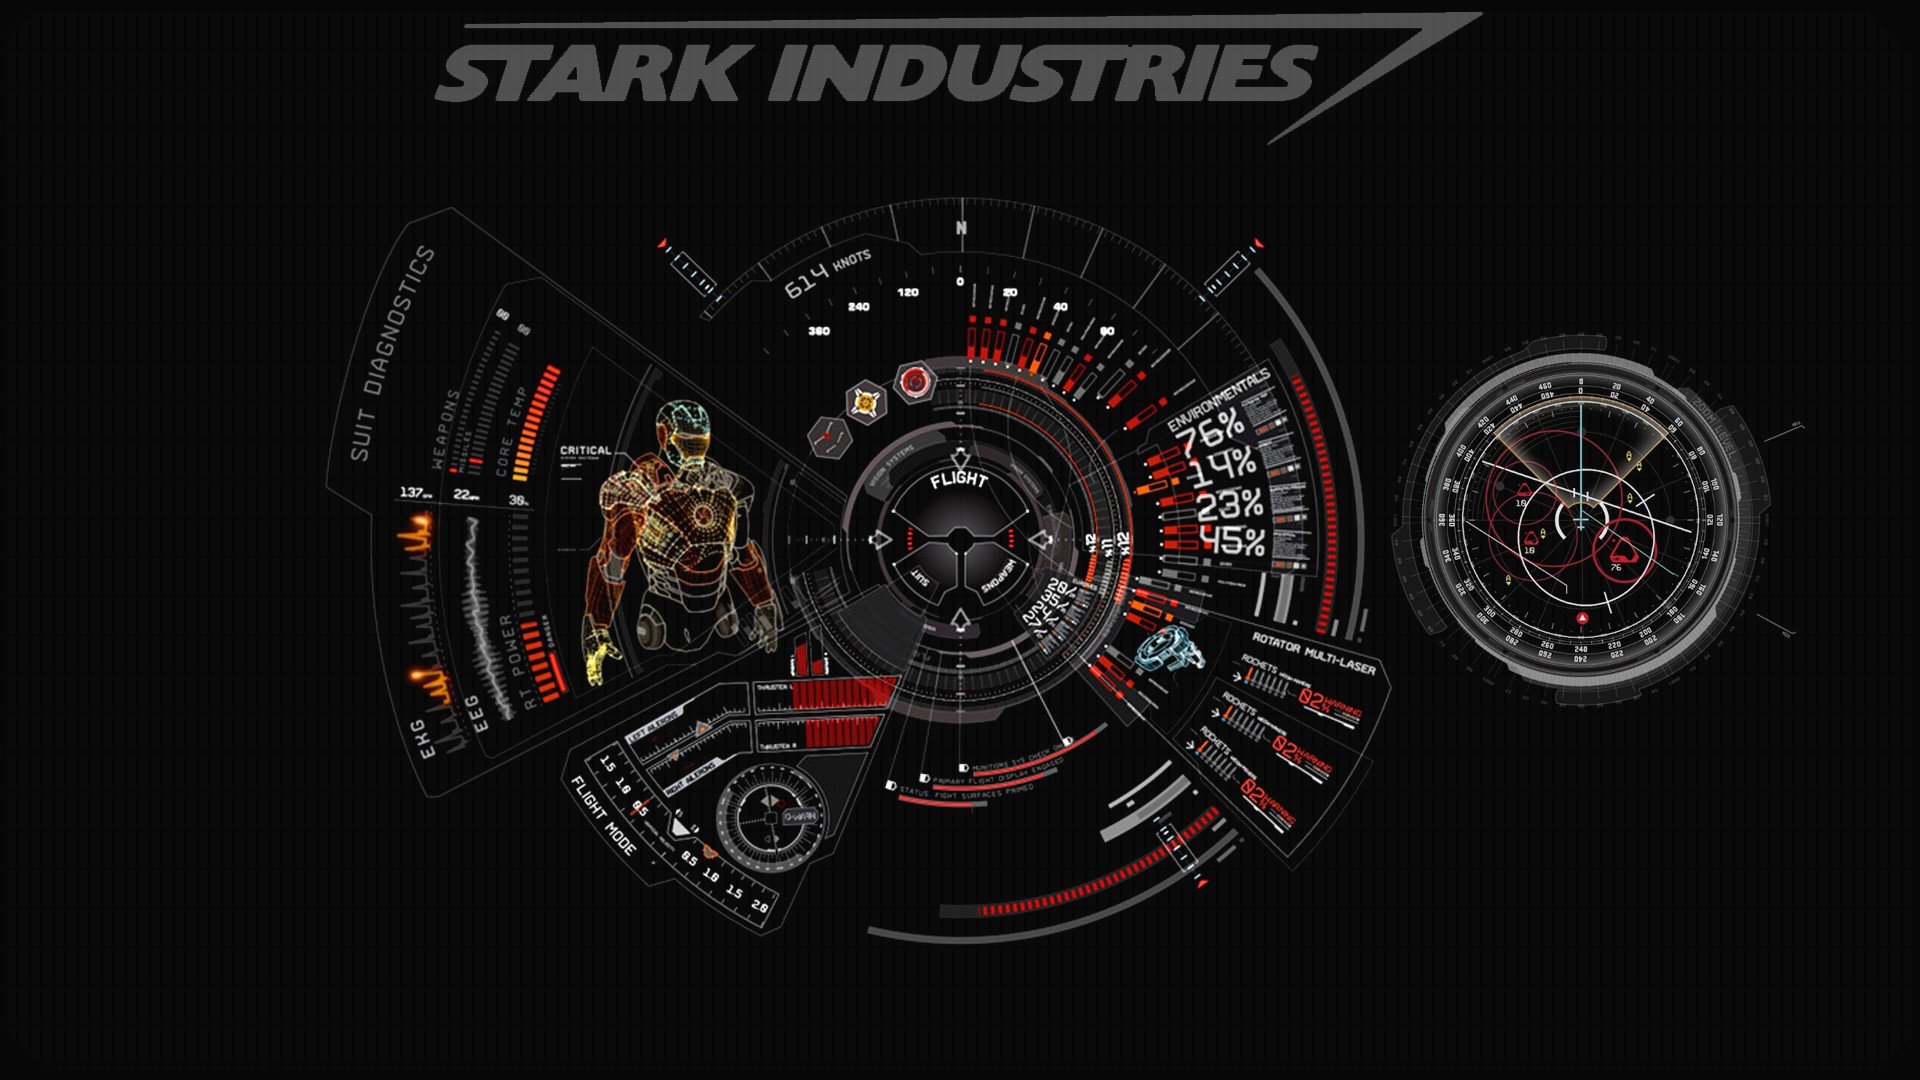 Download 1080p Iron Man desktop background ID:120 for free